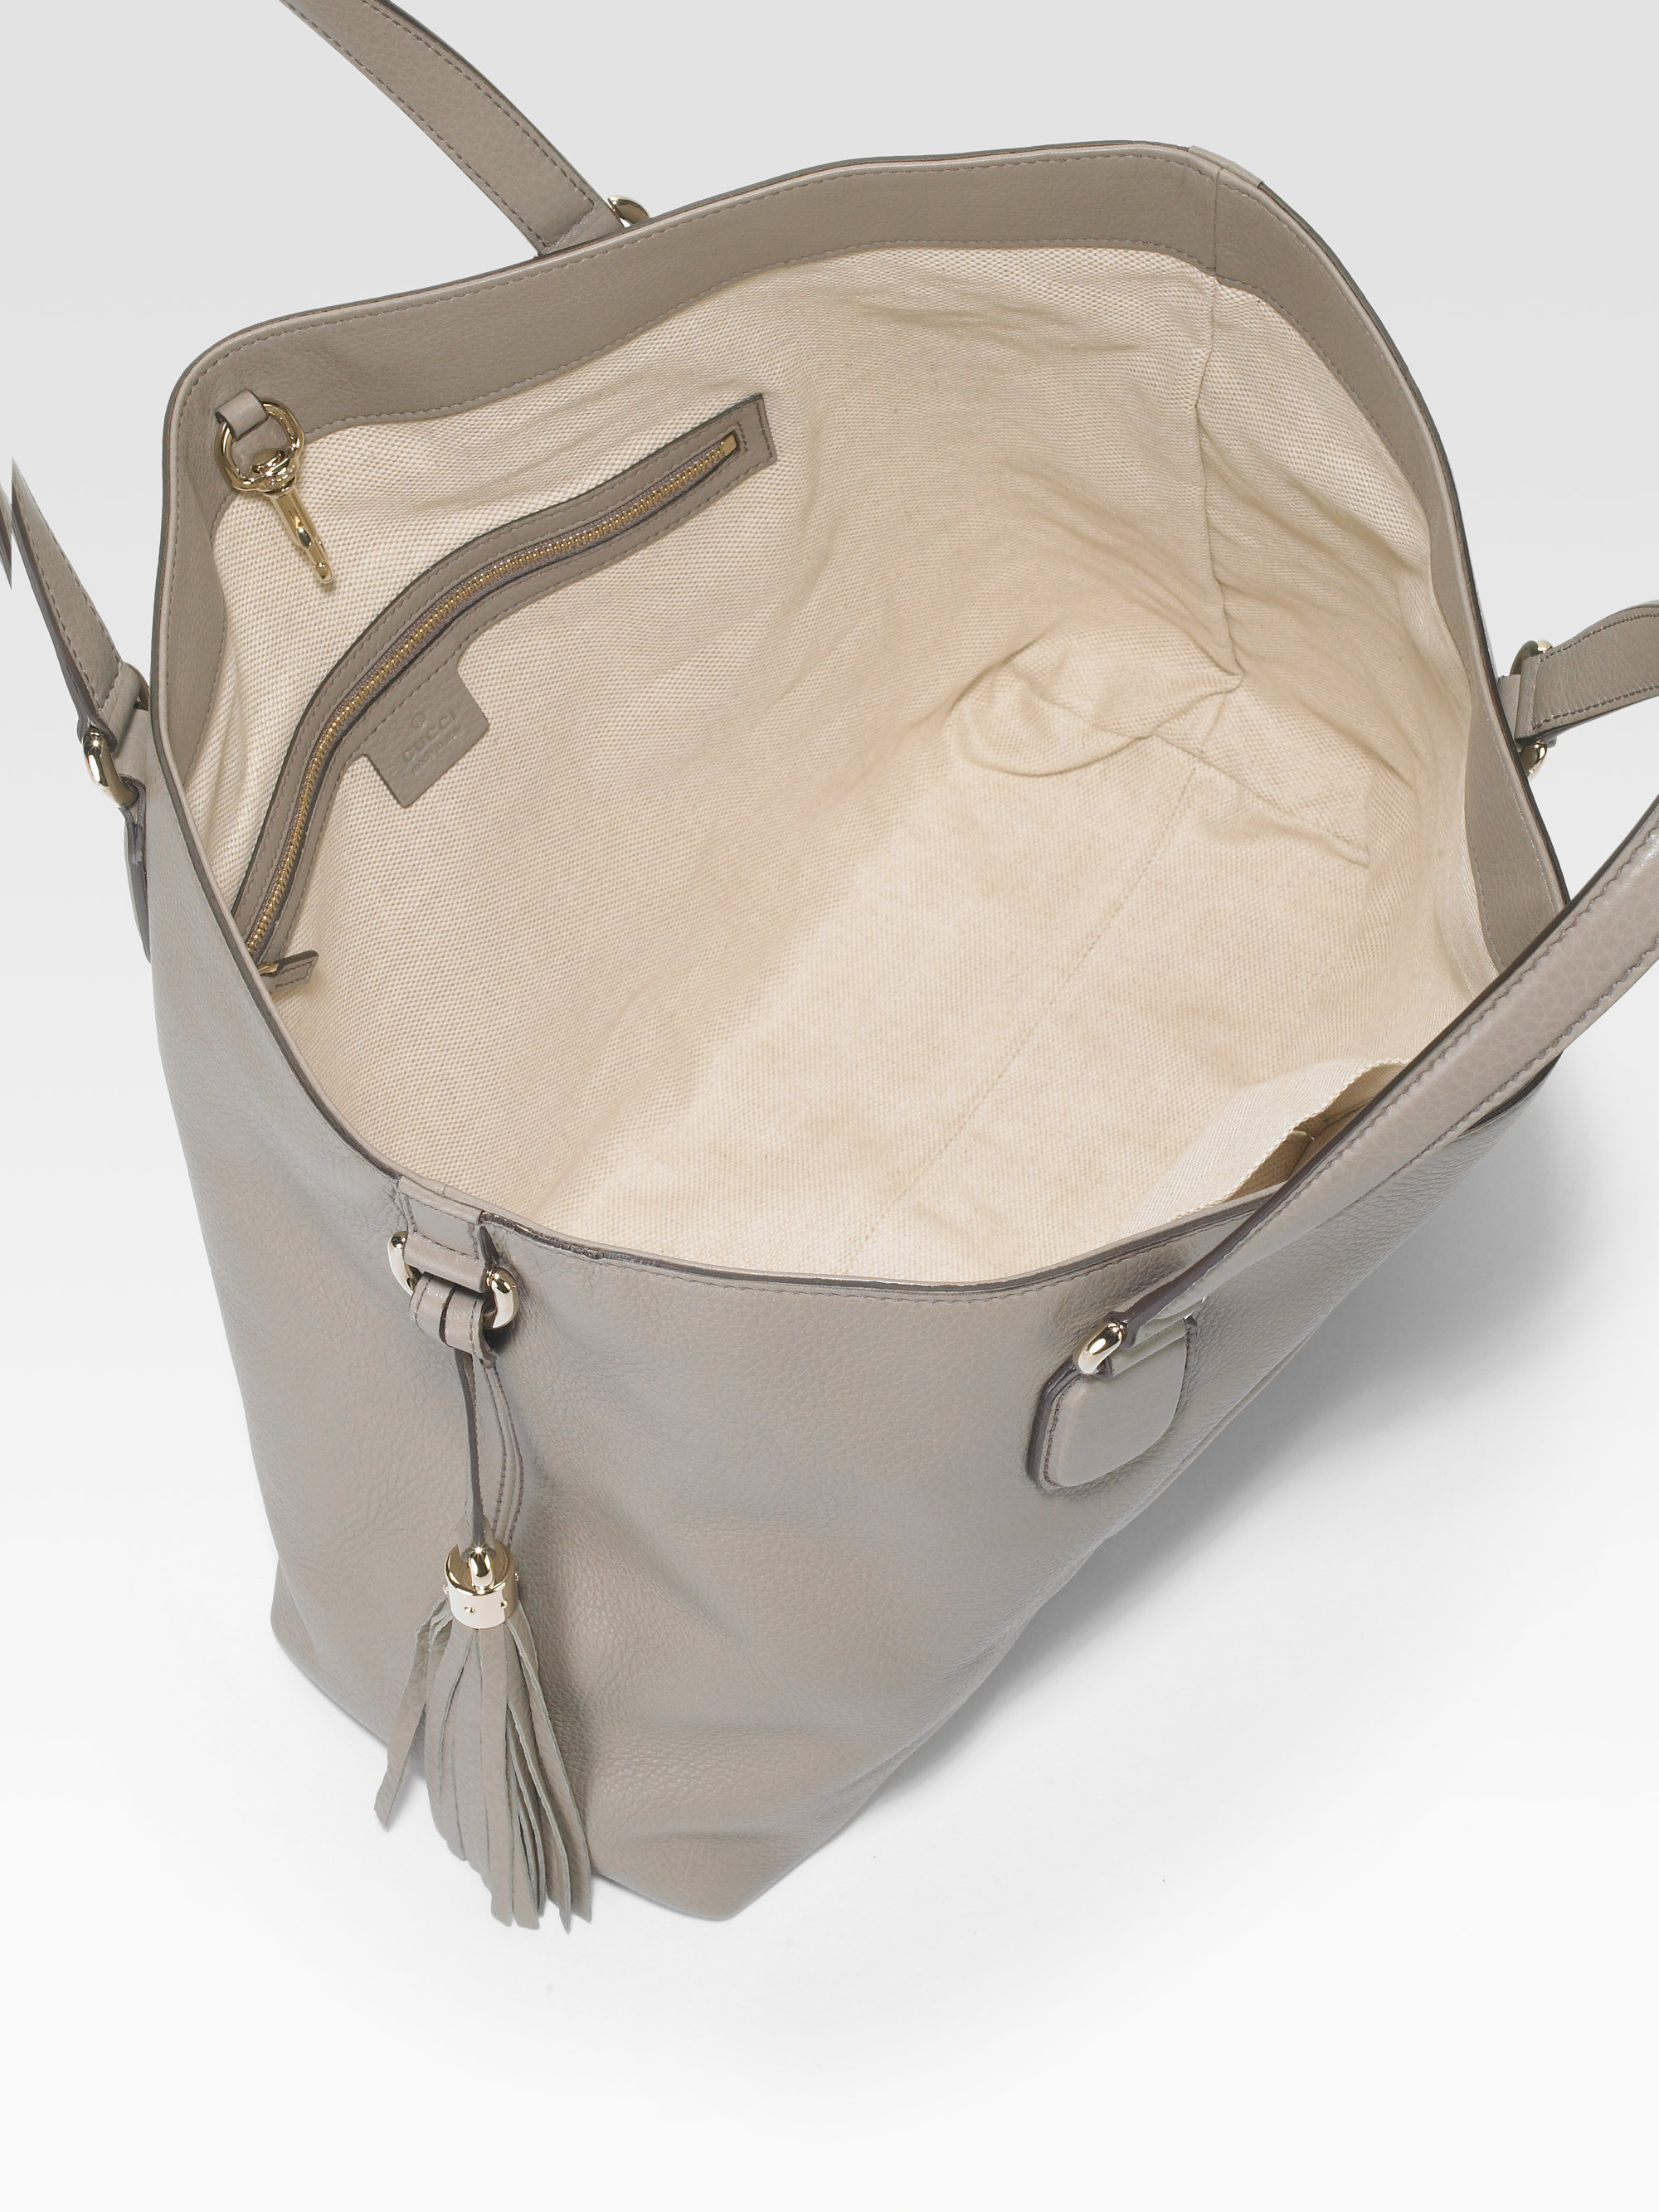 Gucci Soho Medium Tote Bag in Grey (Gray) - Lyst